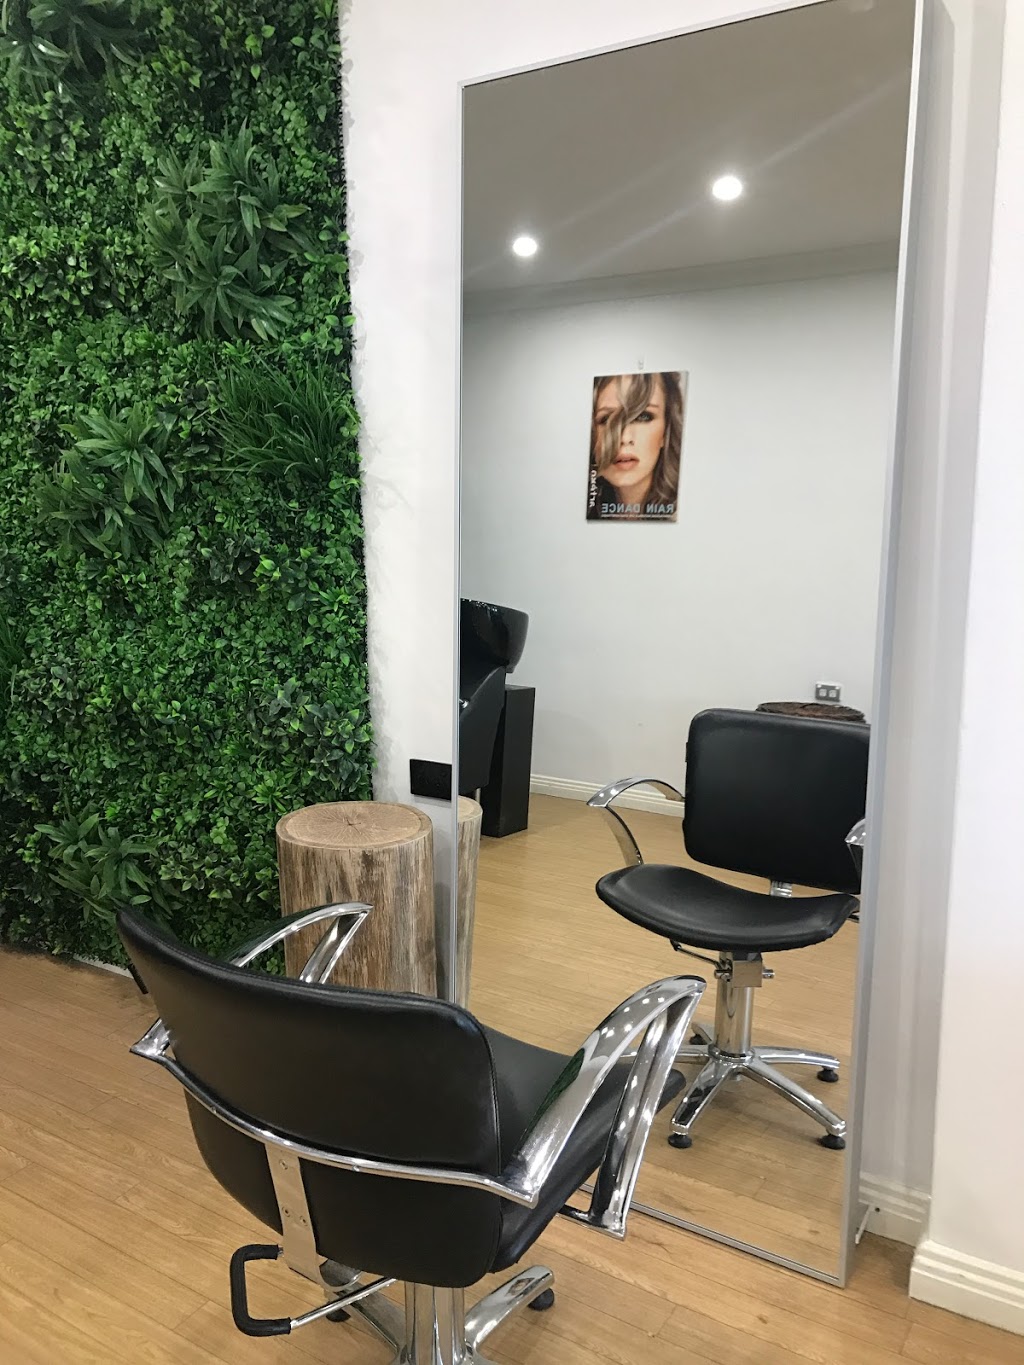 Organic Hair Sydney | beauty salon | 70 Burwood Rd, Concord NSW 2137, Australia | 0297134143 OR +61 2 9713 4143